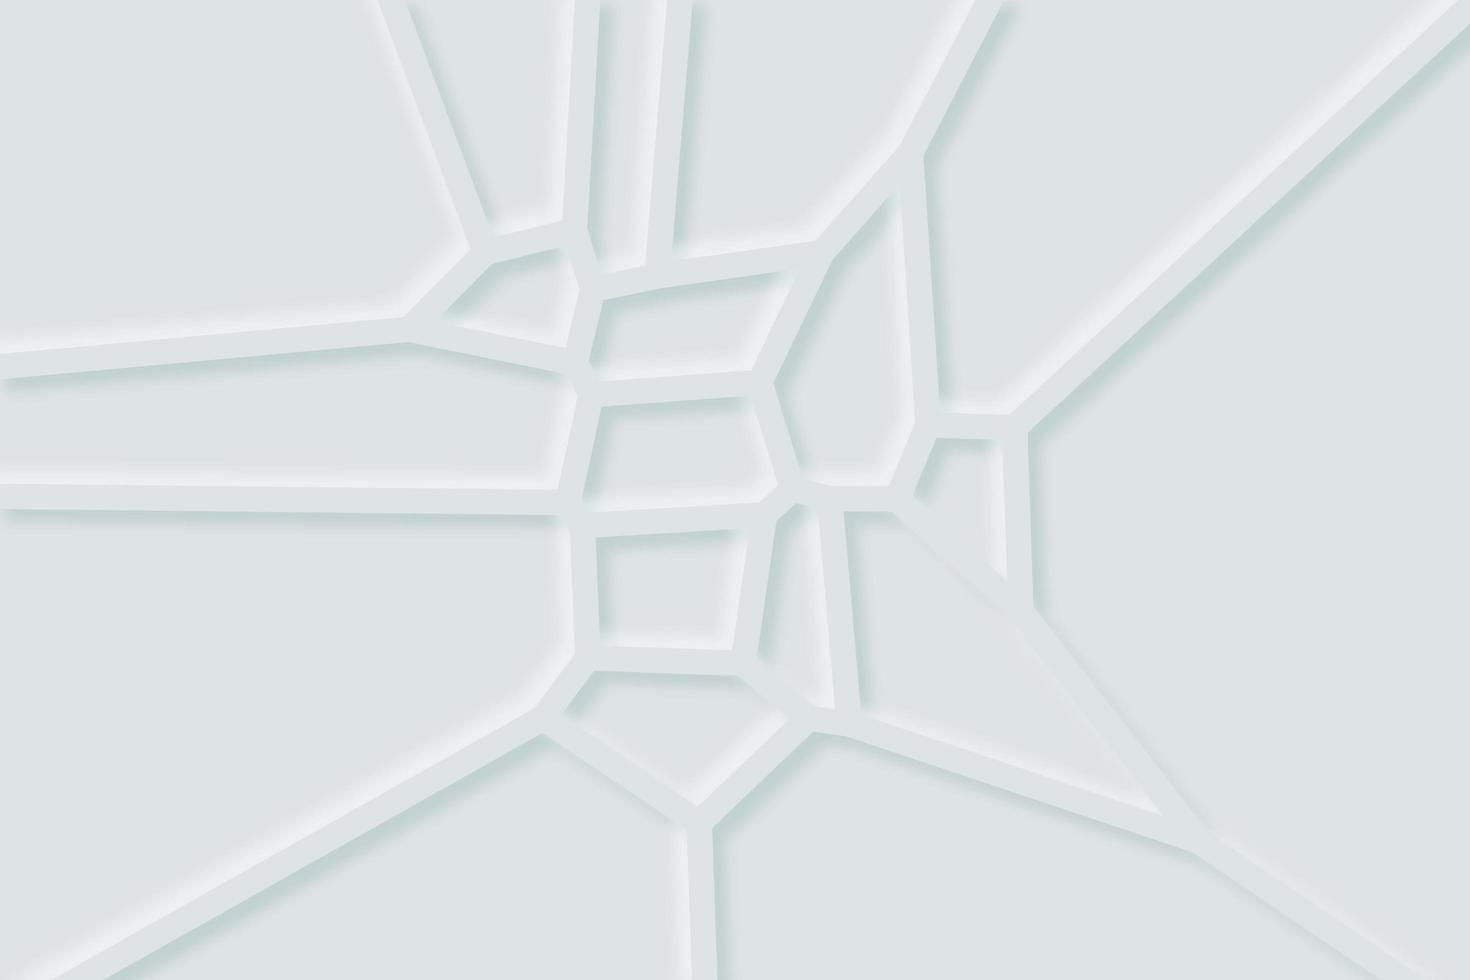 White Voronoi diagram background. Geometric mosaic backdrop in the Neomorphism style photo